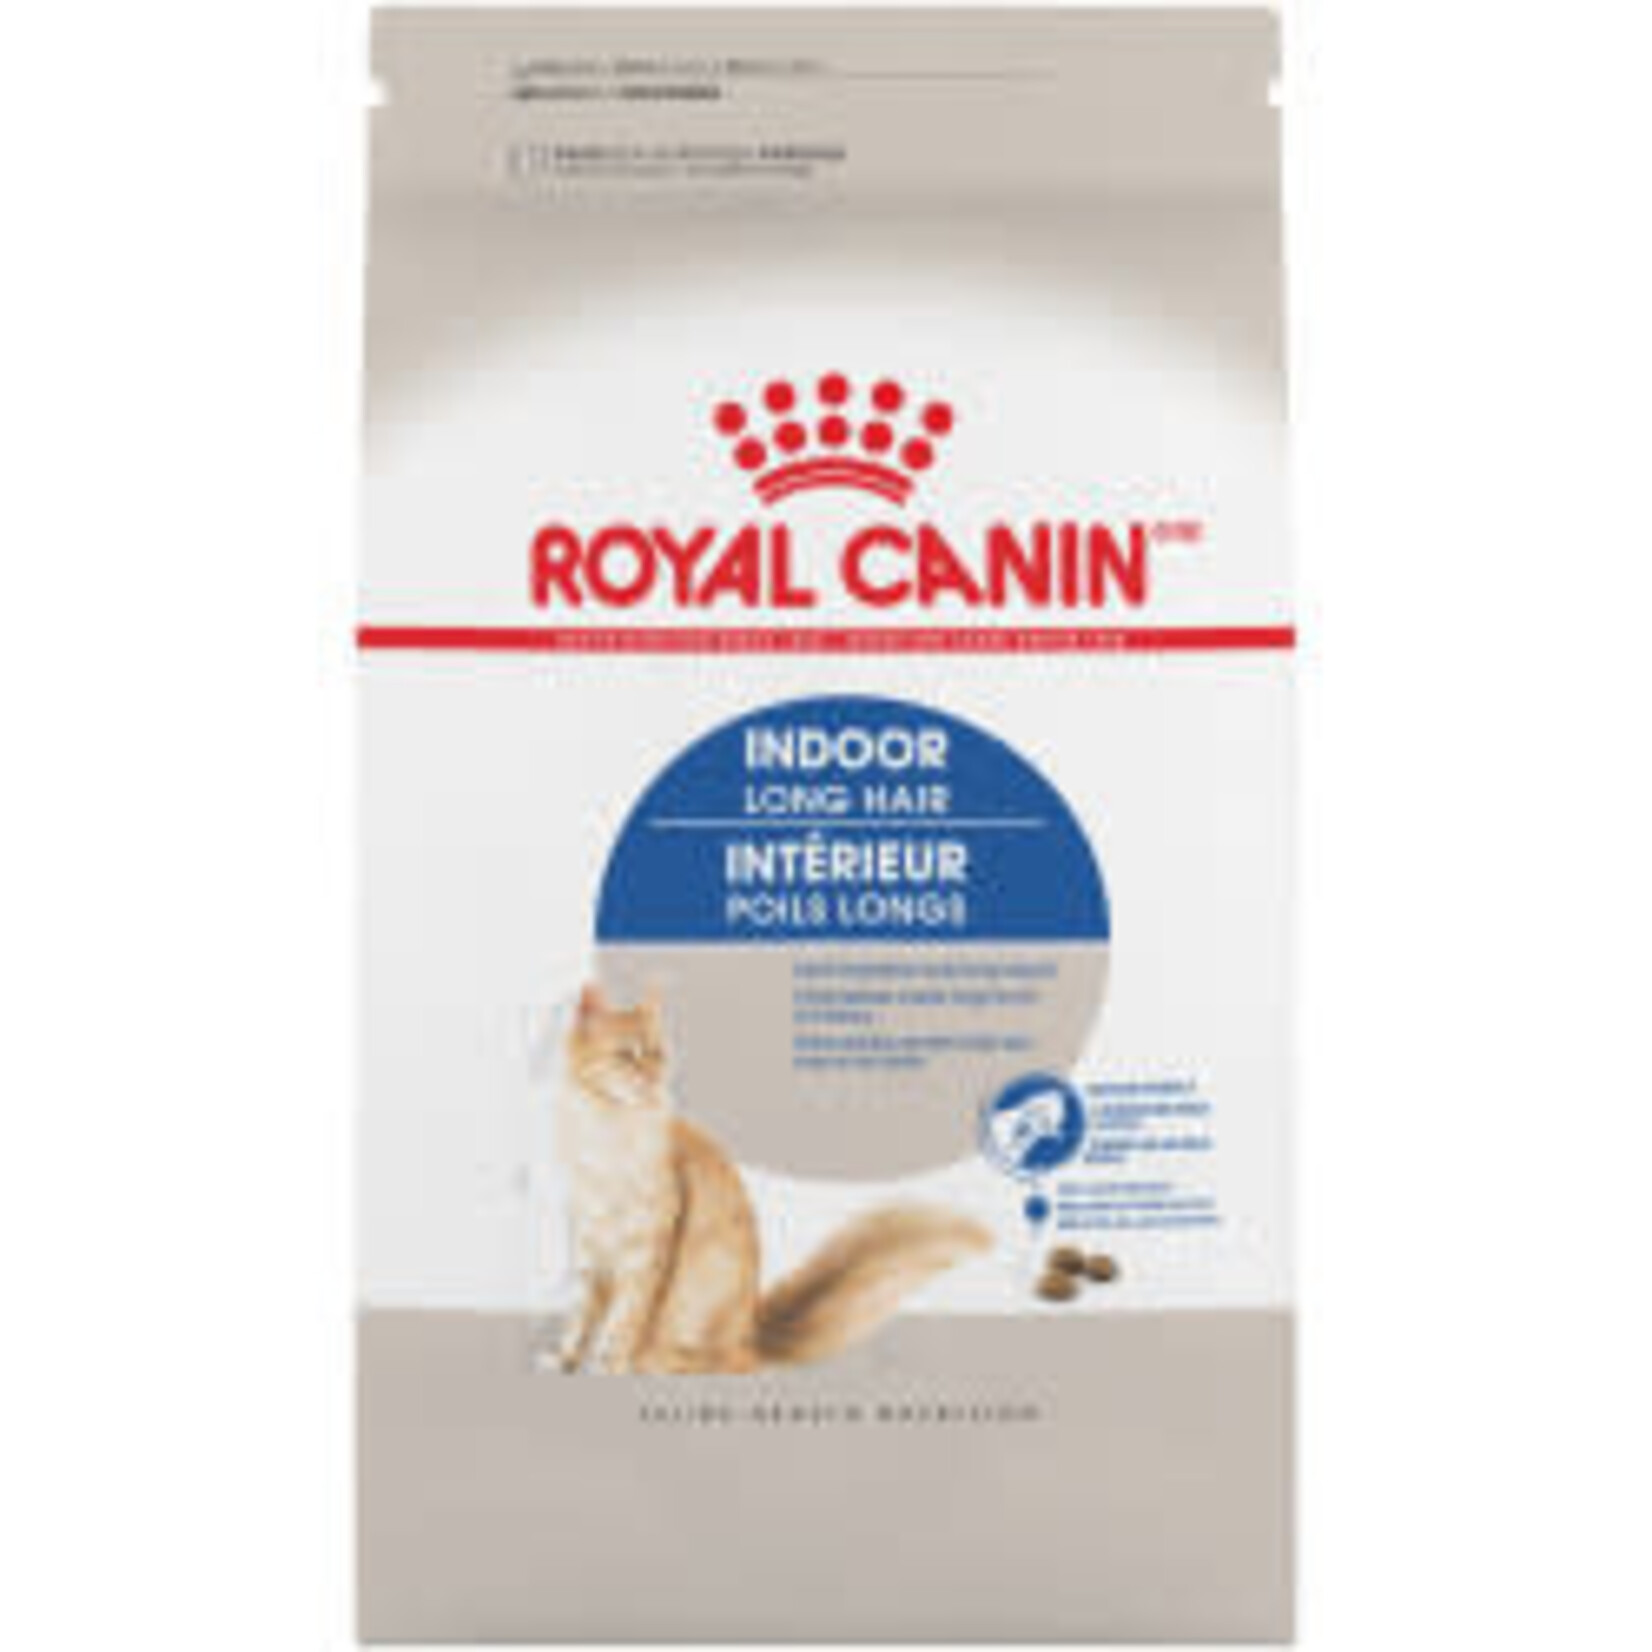 Royal Canin royal canin-chat intérieur poils longs/indoor long hair cat-3lbs